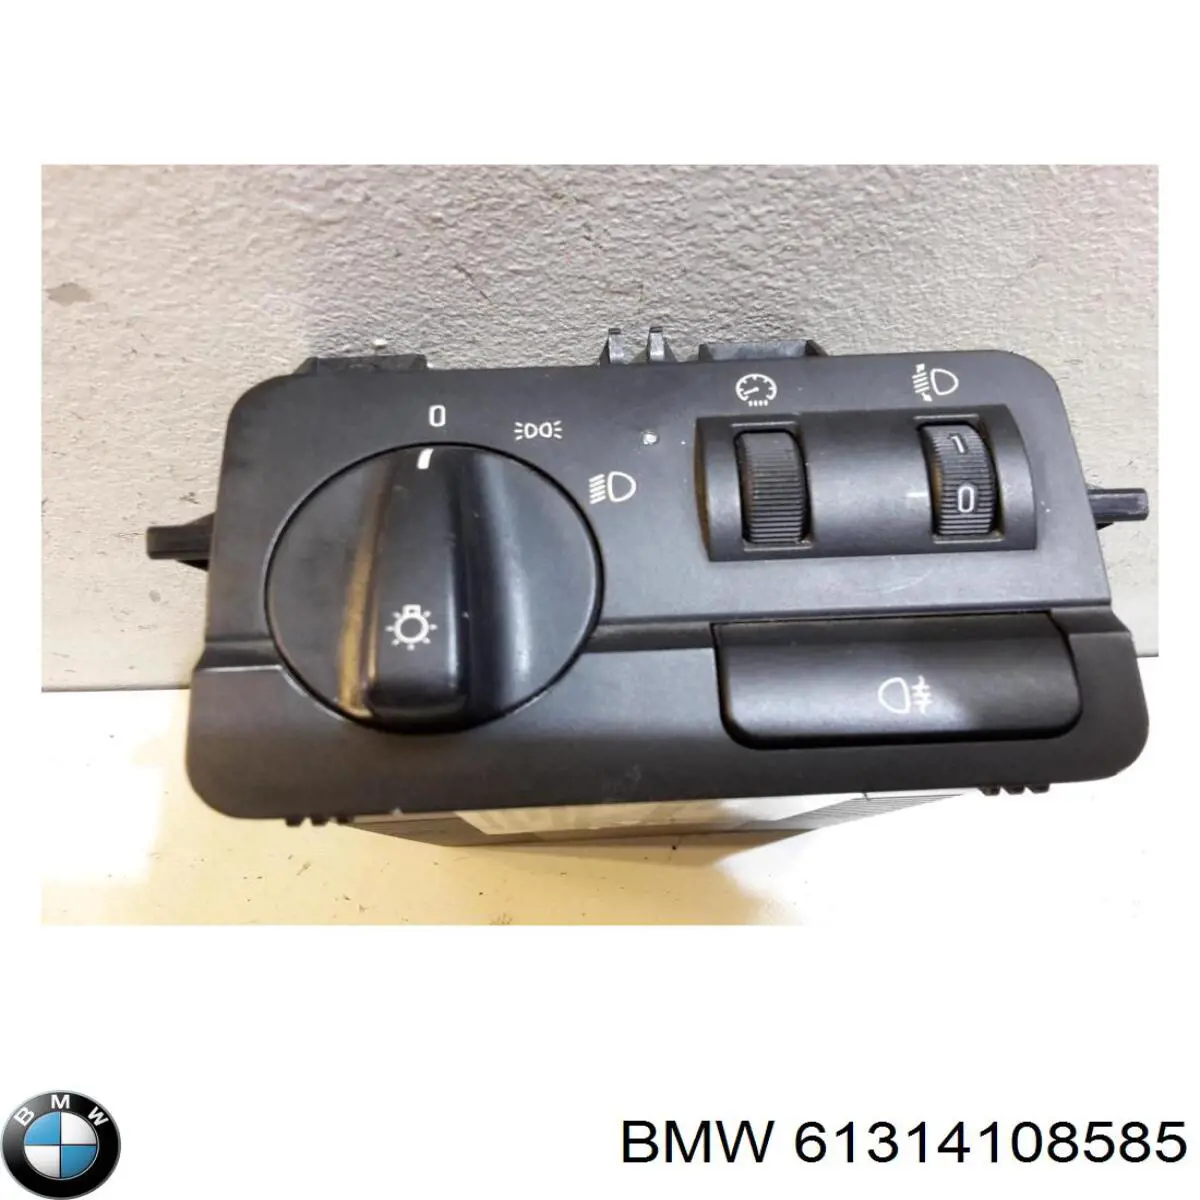 61316918050 BMW interruptor de faros para "torpedo"